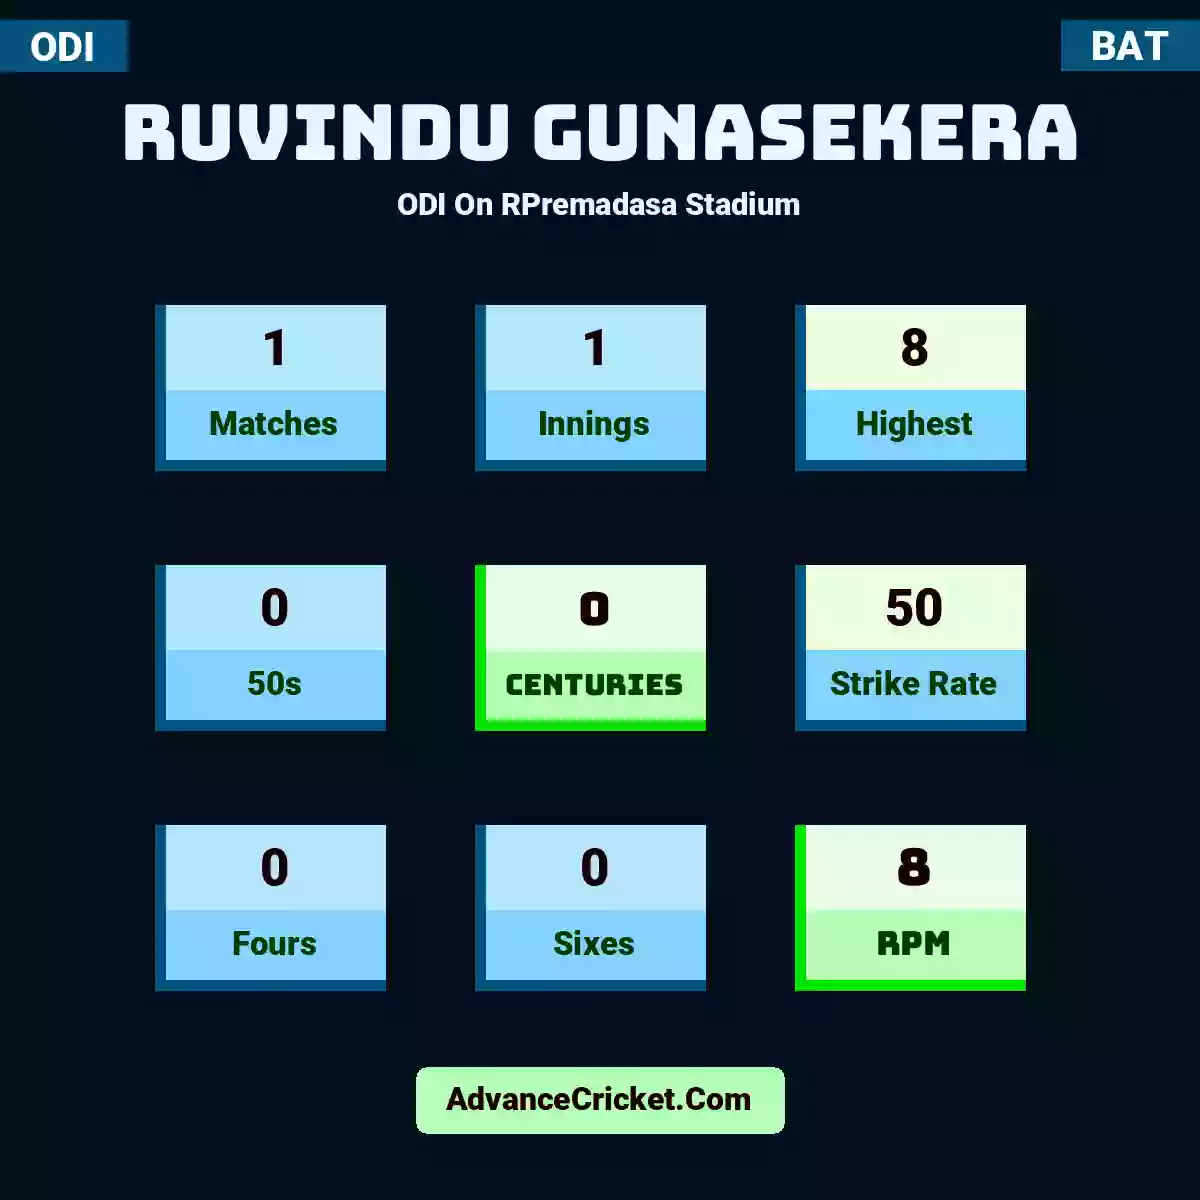 Ruvindu Gunasekera ODI  On RPremadasa Stadium, Ruvindu Gunasekera played 1 matches, scored 8 runs as highest, 0 half-centuries, and 0 centuries, with a strike rate of 50. R.Gunasekera hit 0 fours and 0 sixes, with an RPM of 8.